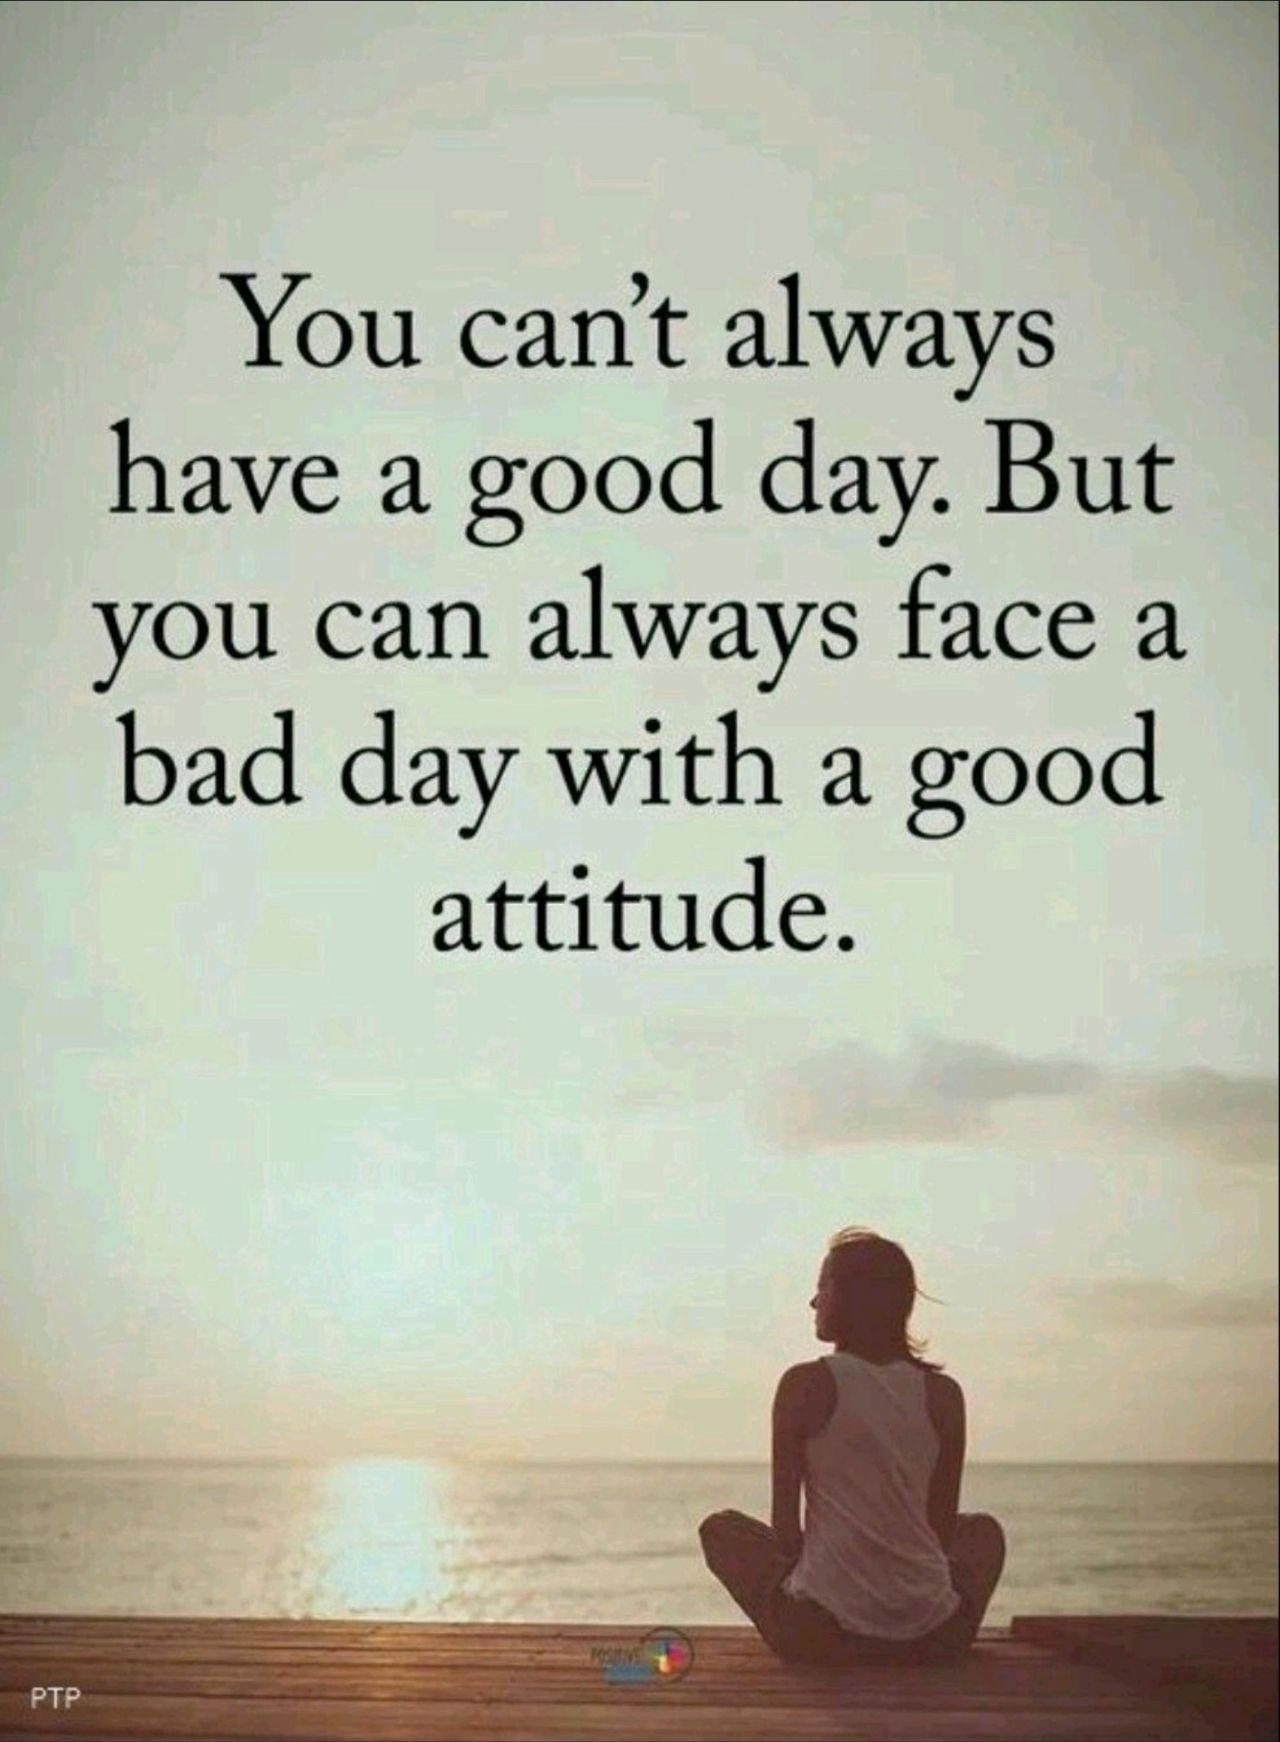 good_attitude_is_essential.jpeg